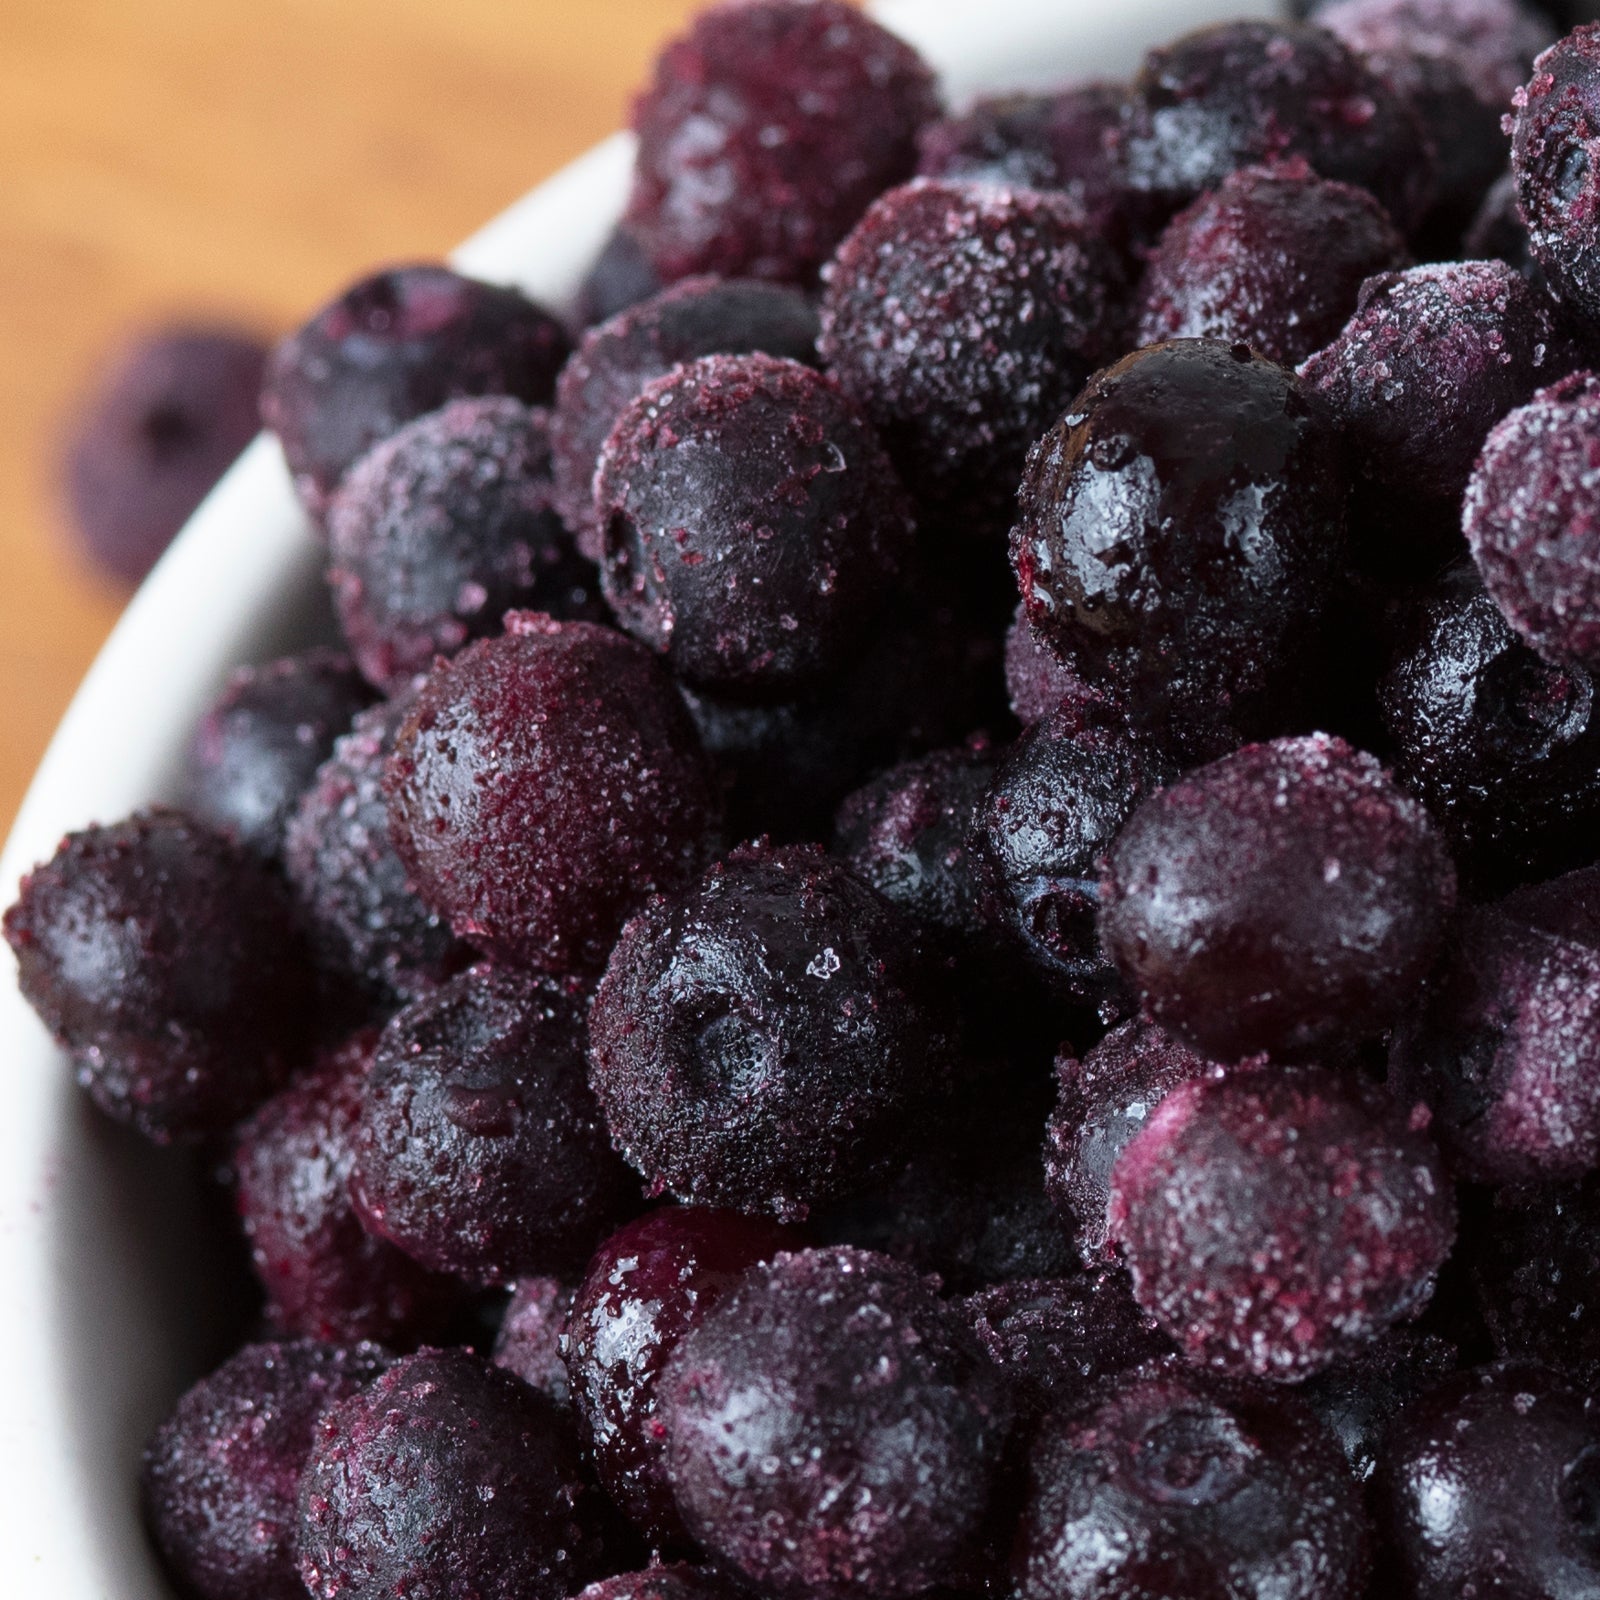 Certified Organic Frozen Wild Blueberries from Canada (1kg) - Horizon Farms